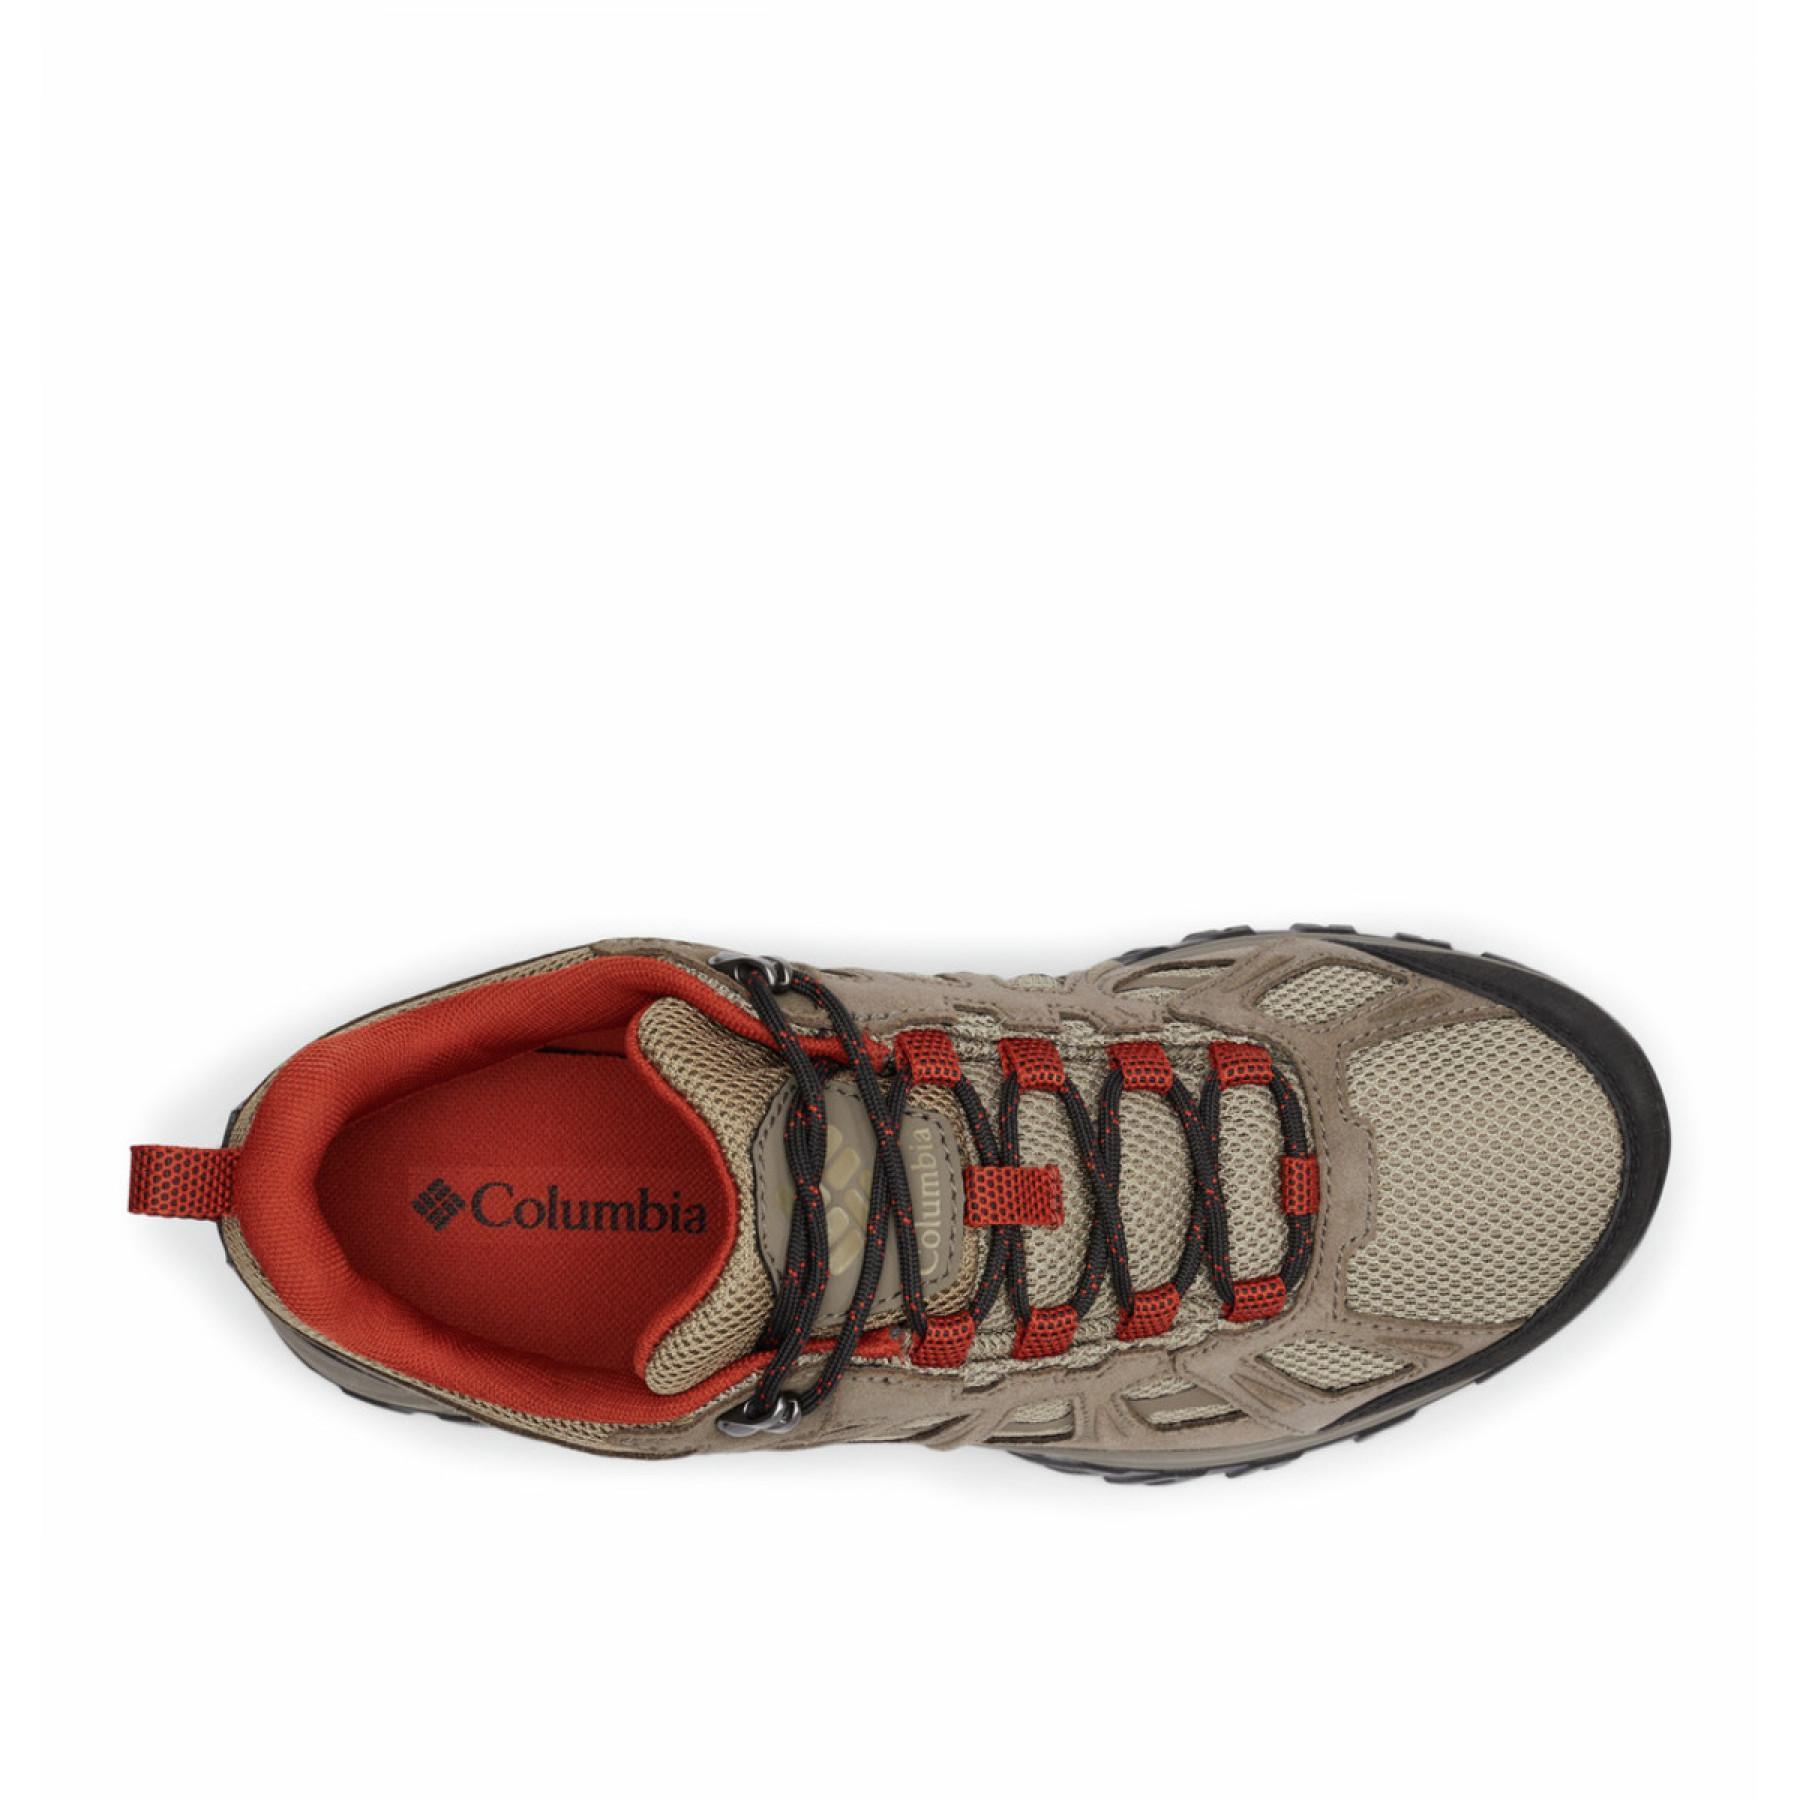 Waterproof hiking shoes Columbia Redmond III